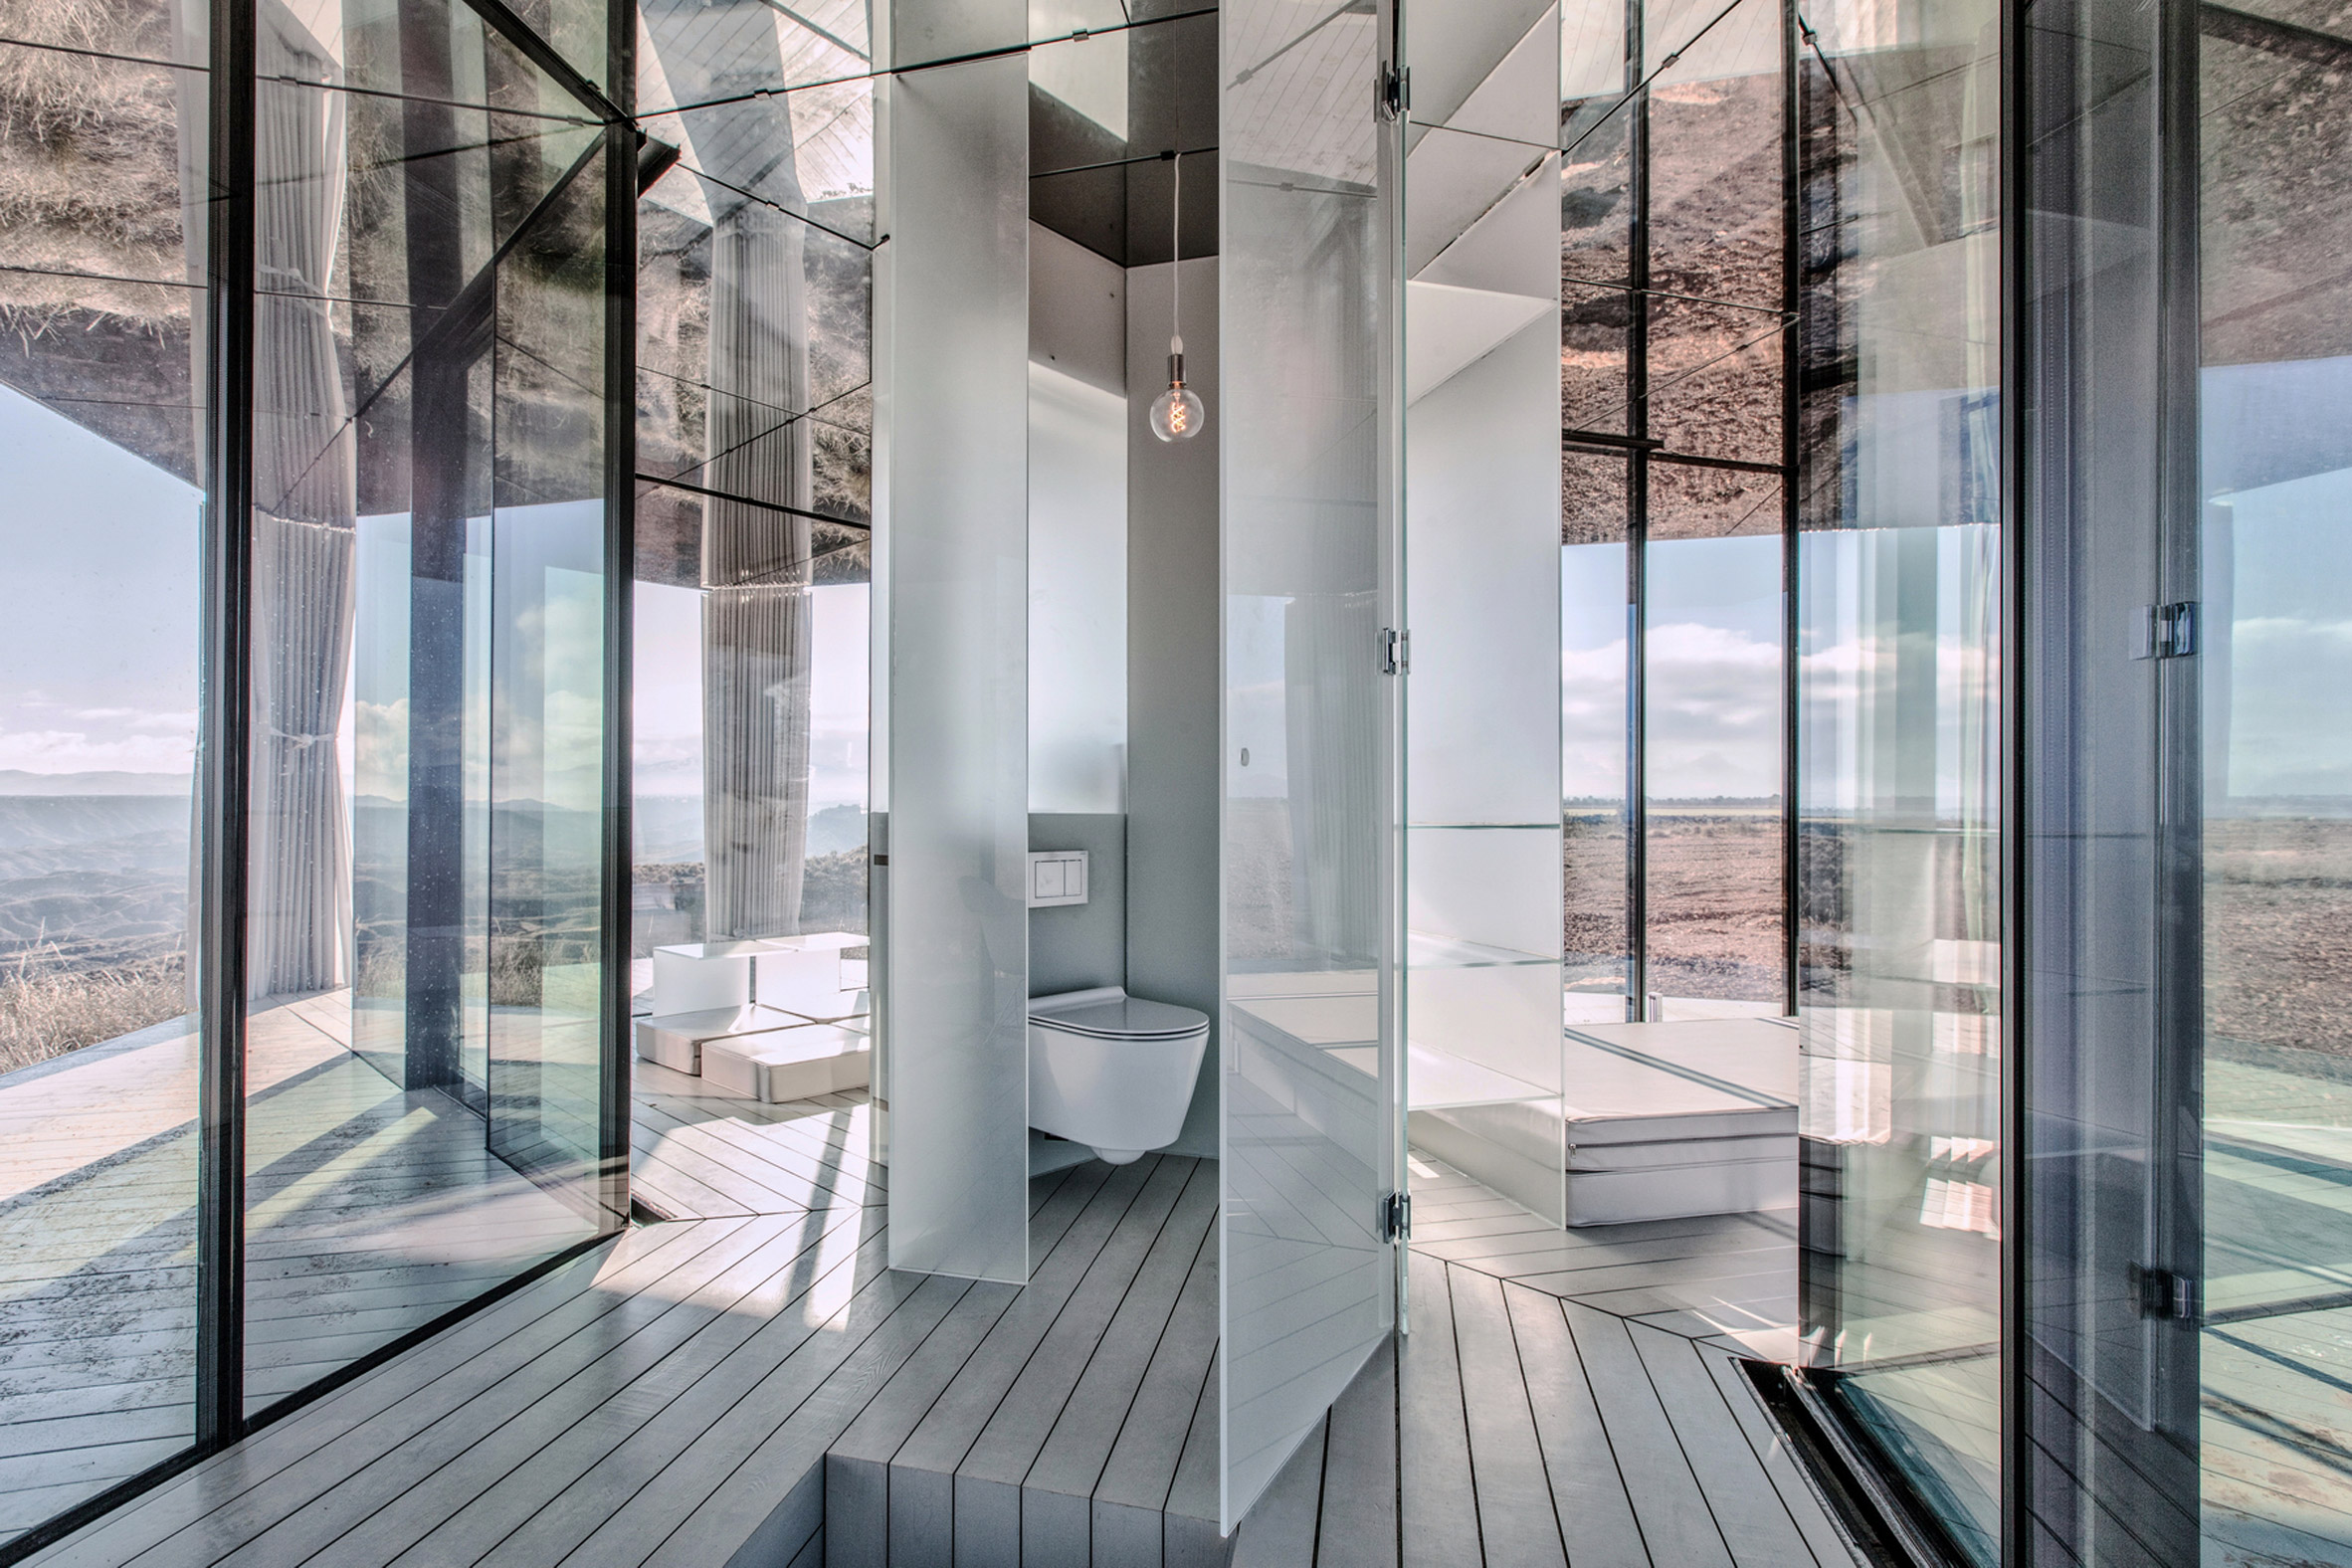 Glass Pavilion by OFIS Arhitekti provides a platform for star gazing in a Spanish desert